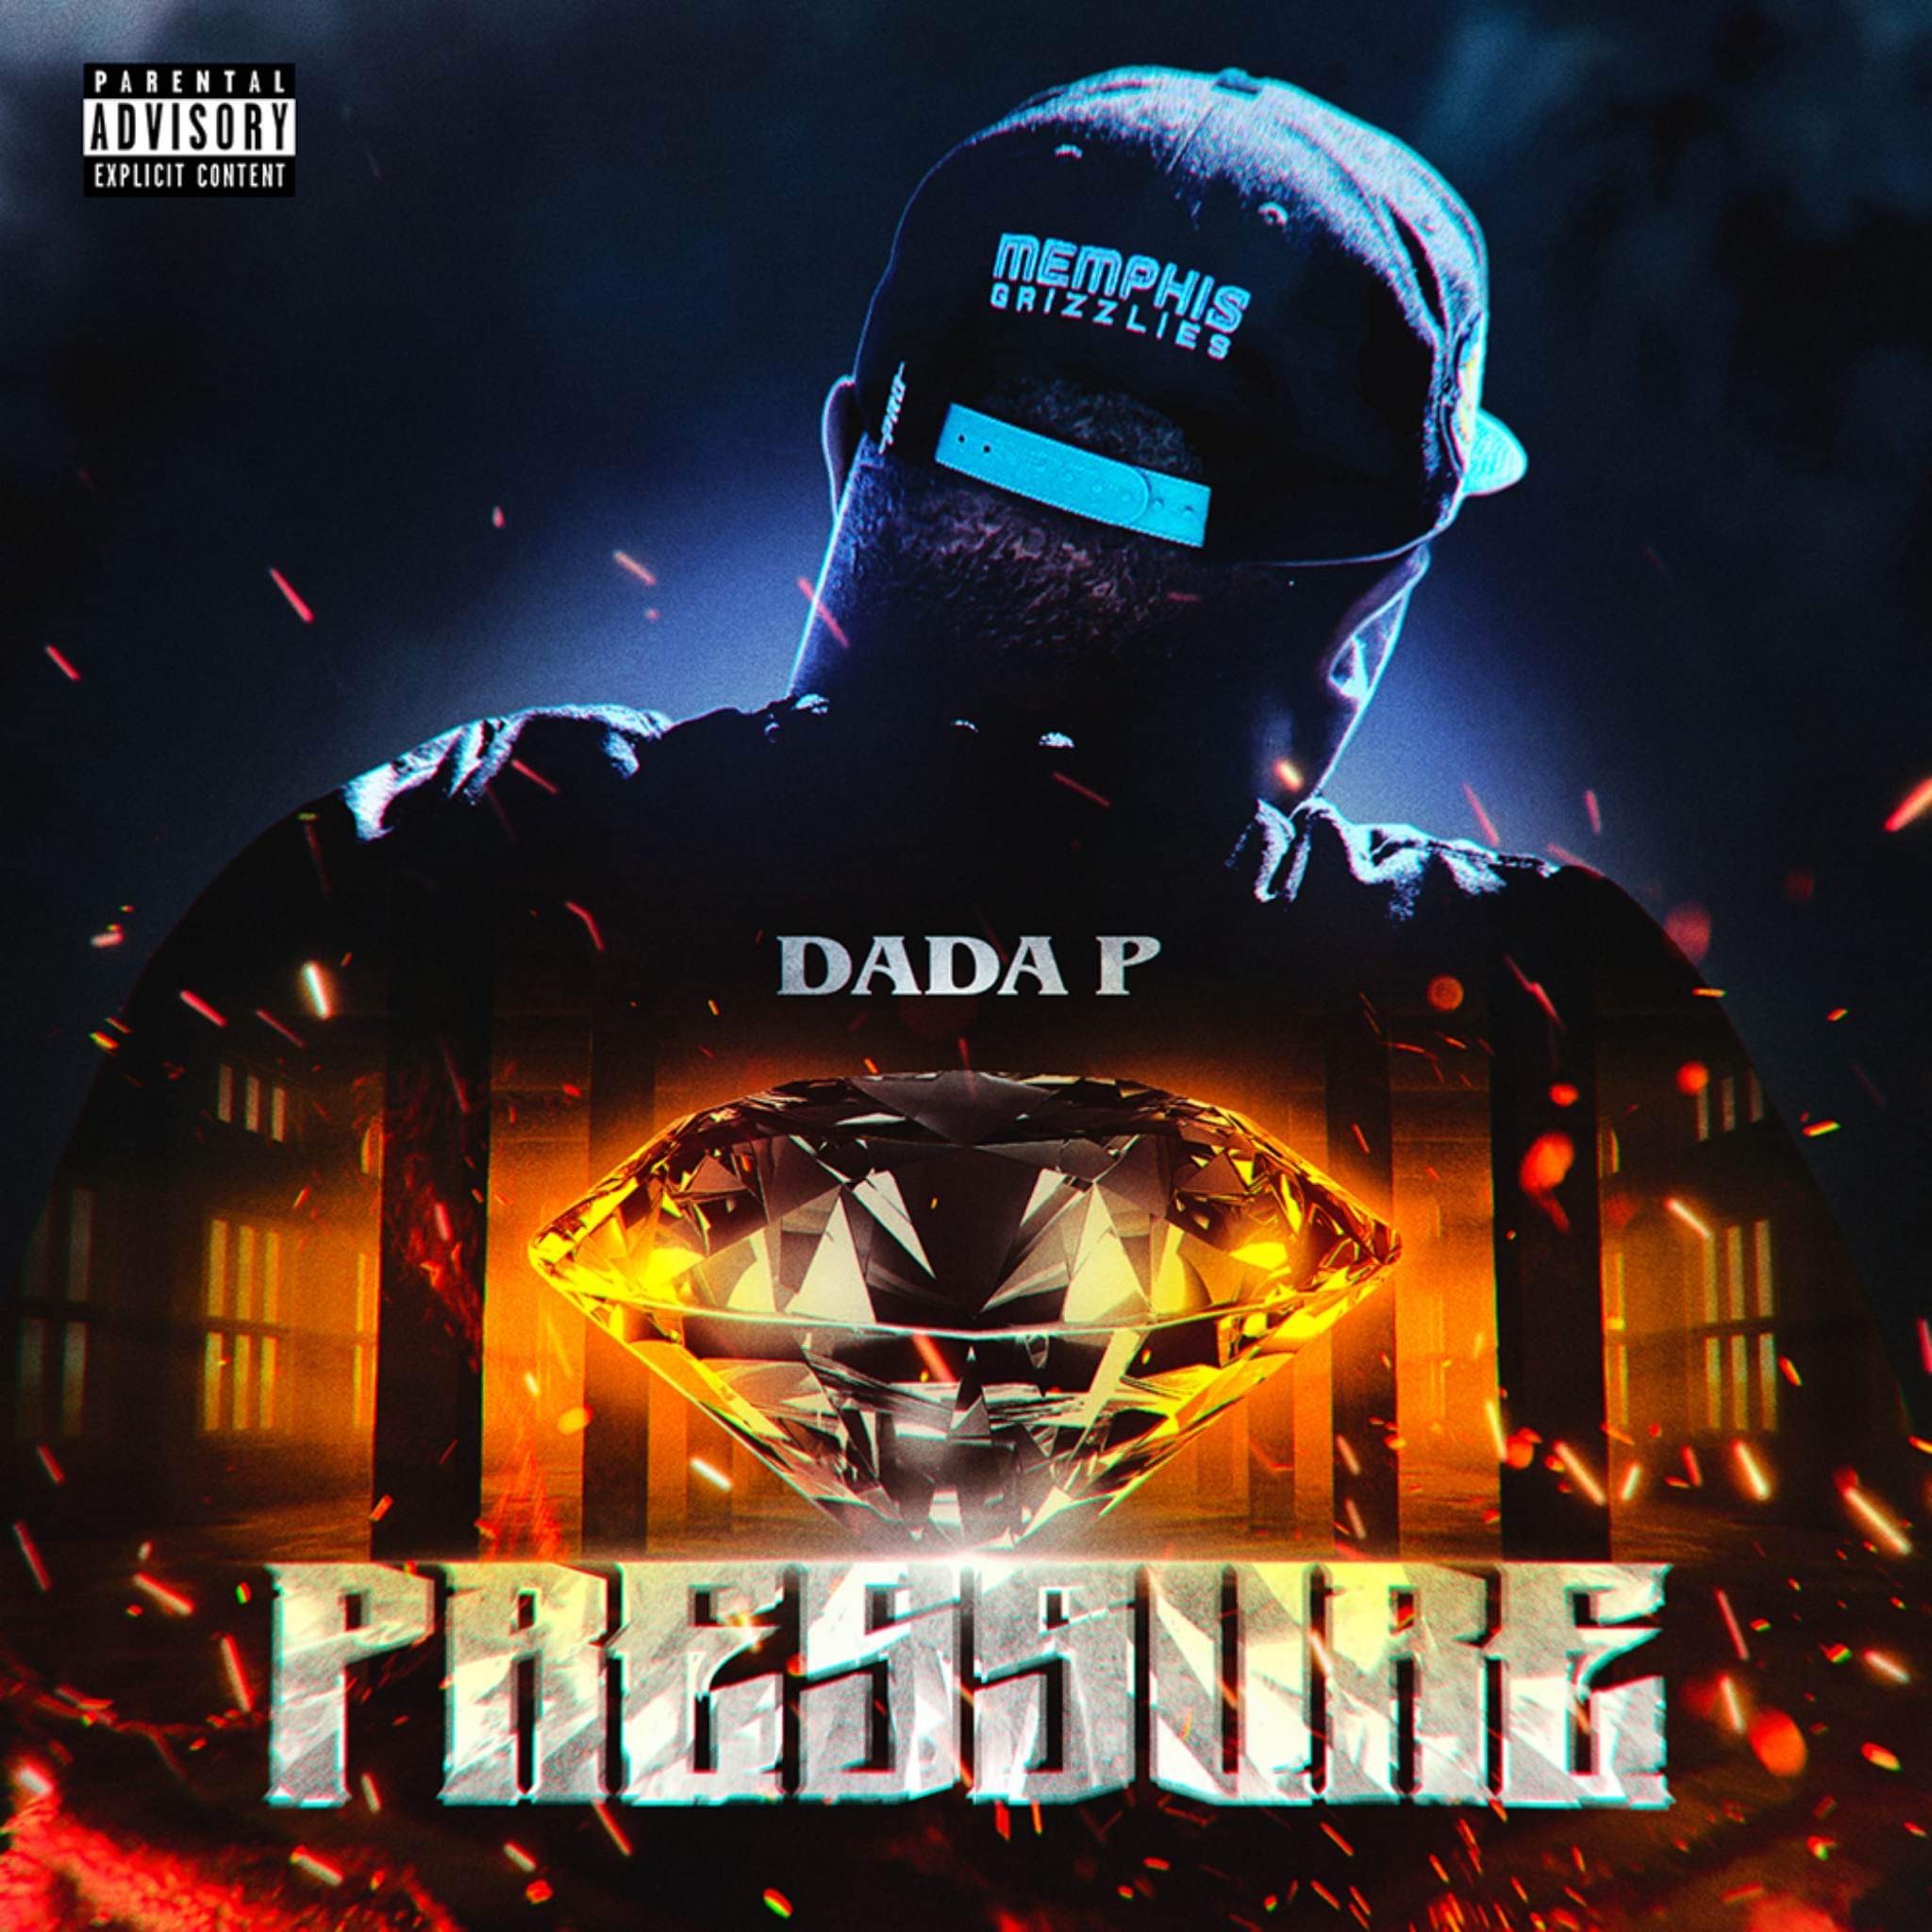 Dada P “Pressure” X smf bankroll shotty